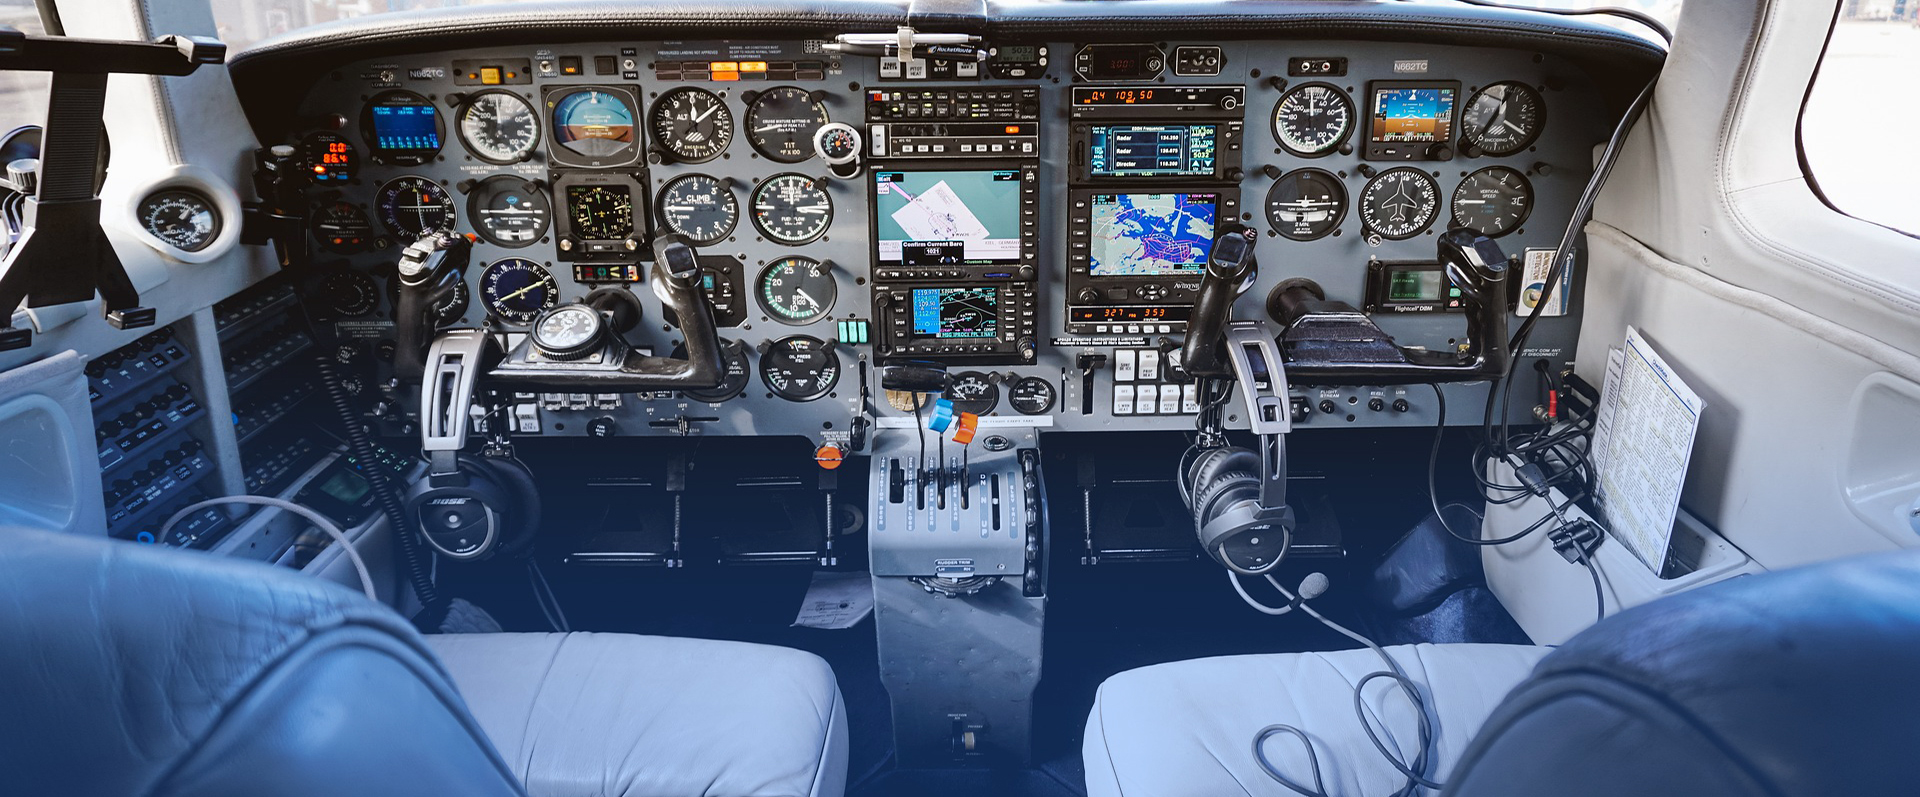 ASAP 3Sixty - Aircraft Cockpit Parts Global Supplier